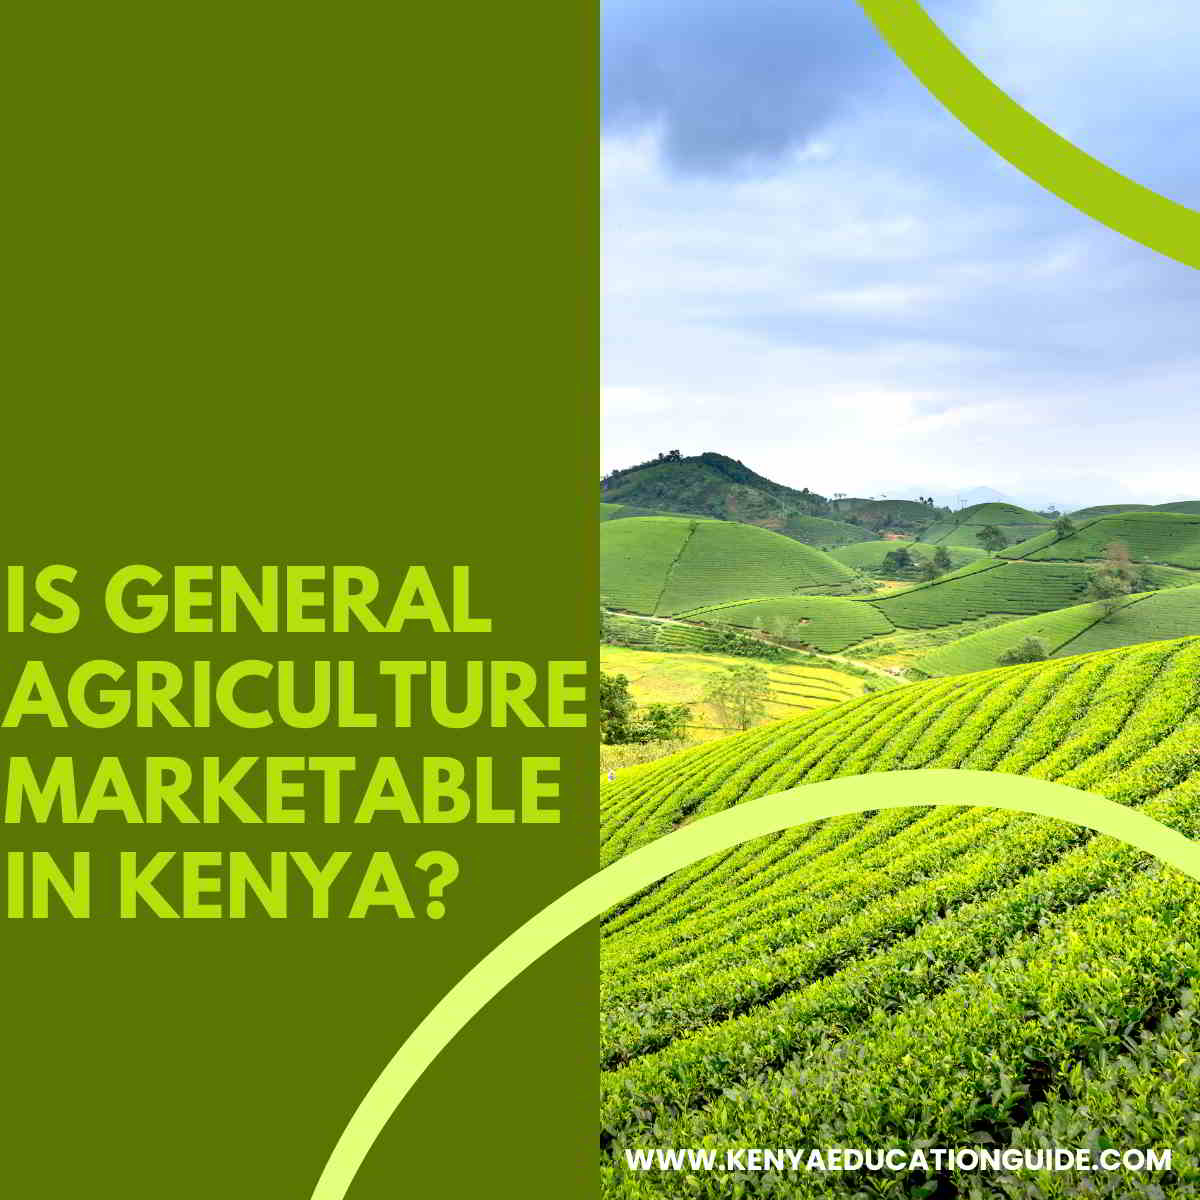 Is general agriculture marketable in Kenya